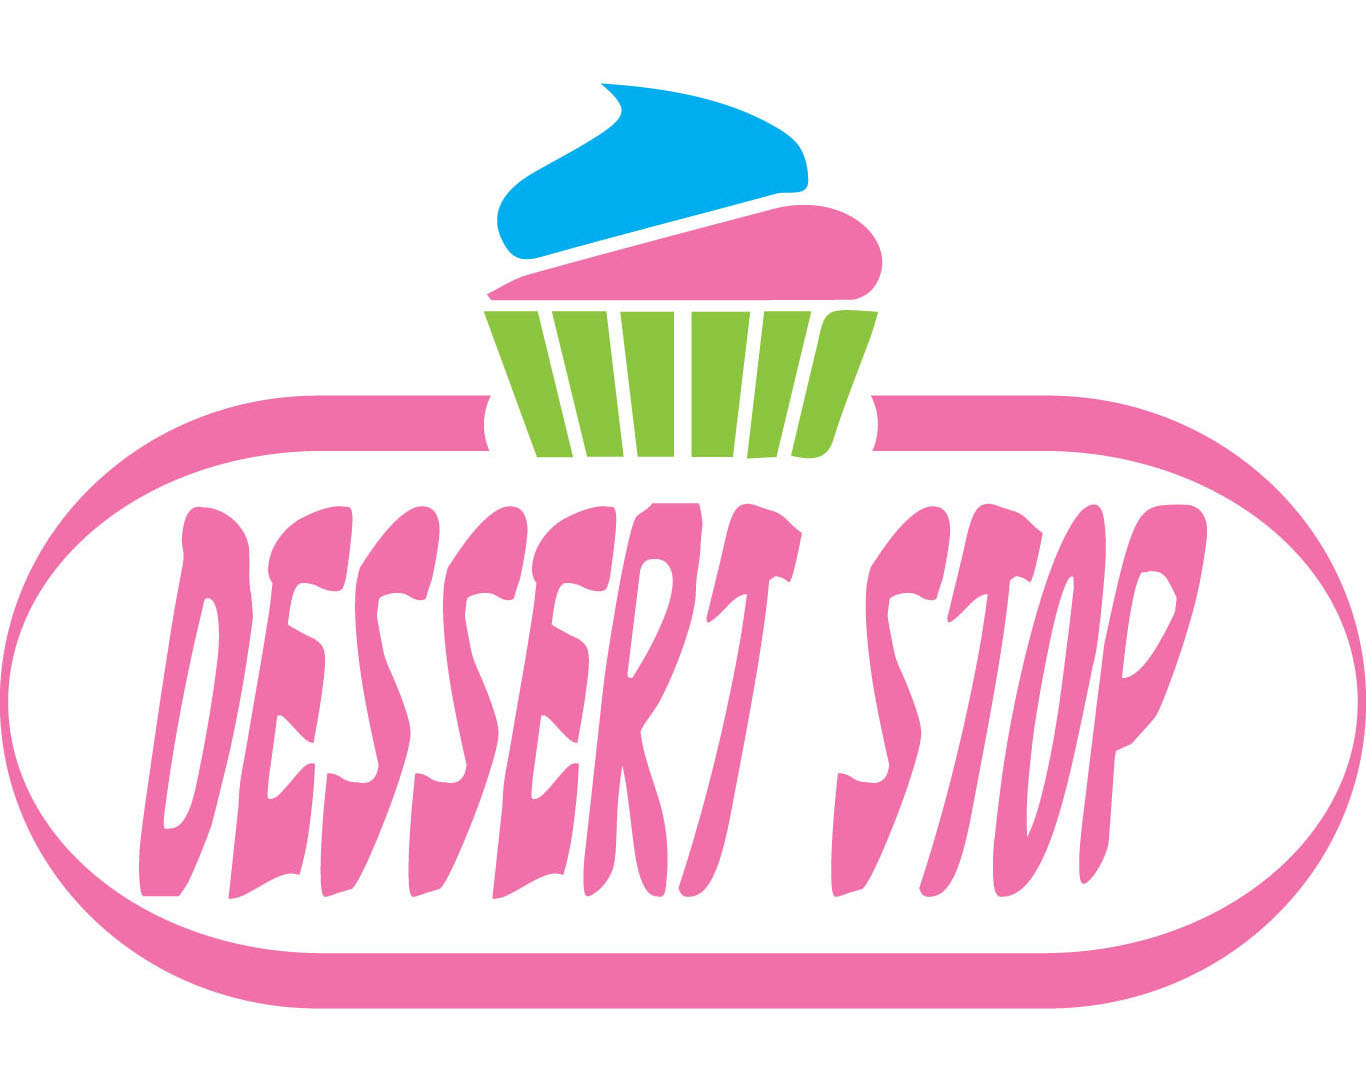 Desert Stop Food Truck Catering cupcakes